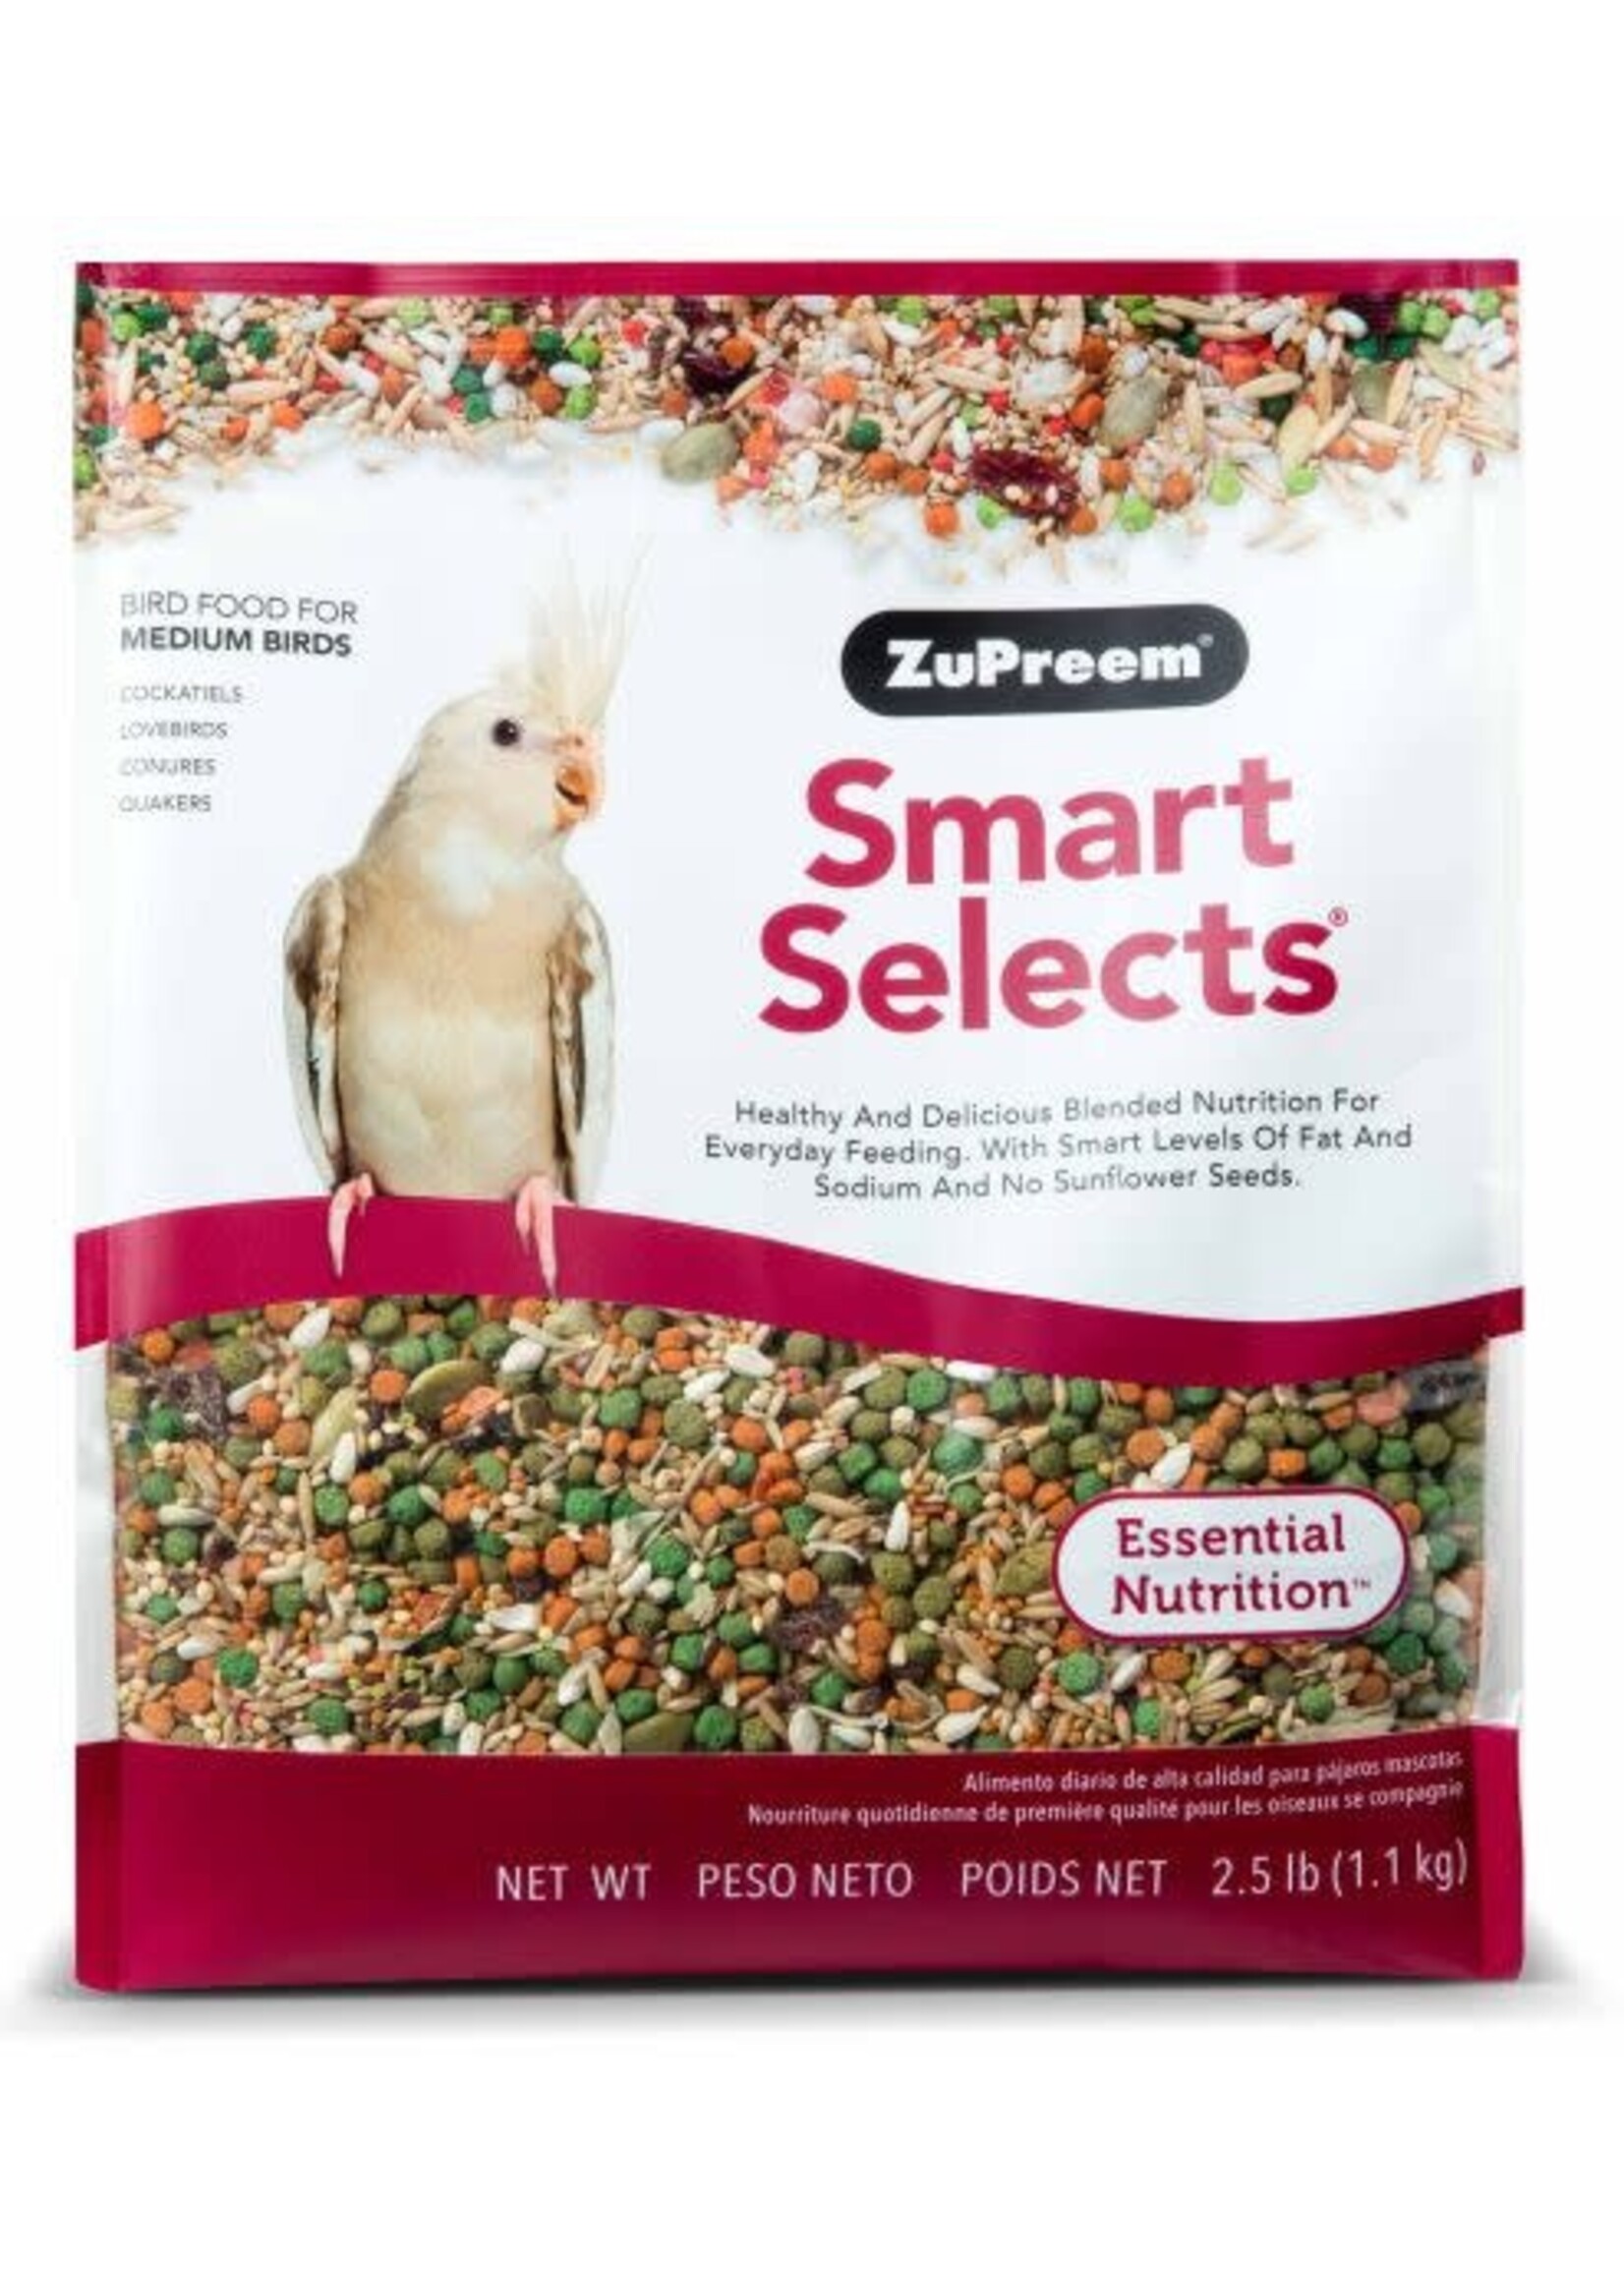 Zupreem ZuPreem "Smart Selects" Food For Cockatiel, Lovebirds & Medium Birds 2.5lbs 32020